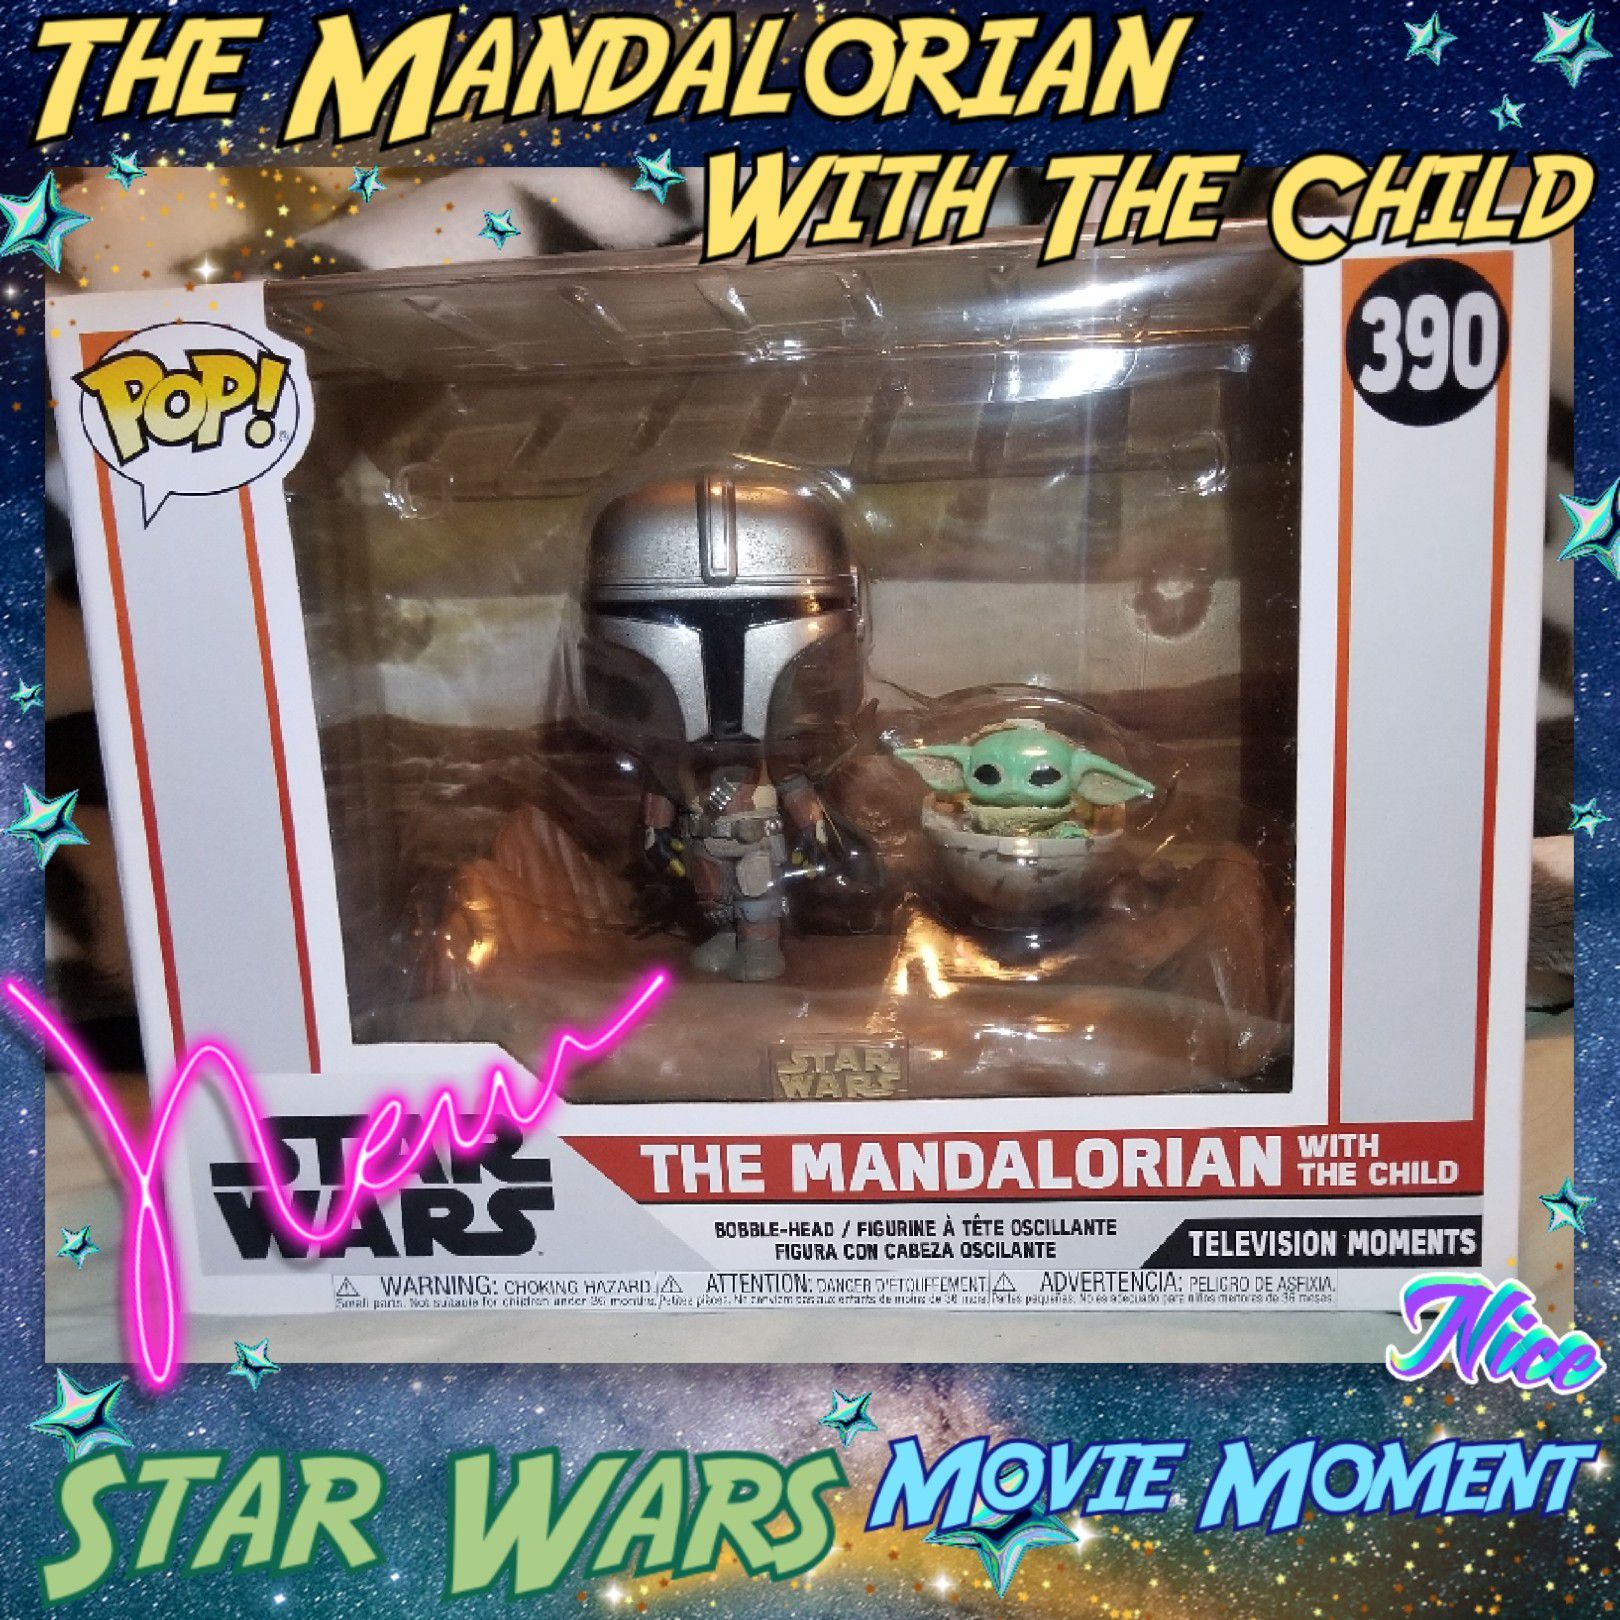 Mandalorian with Child, Star Wars